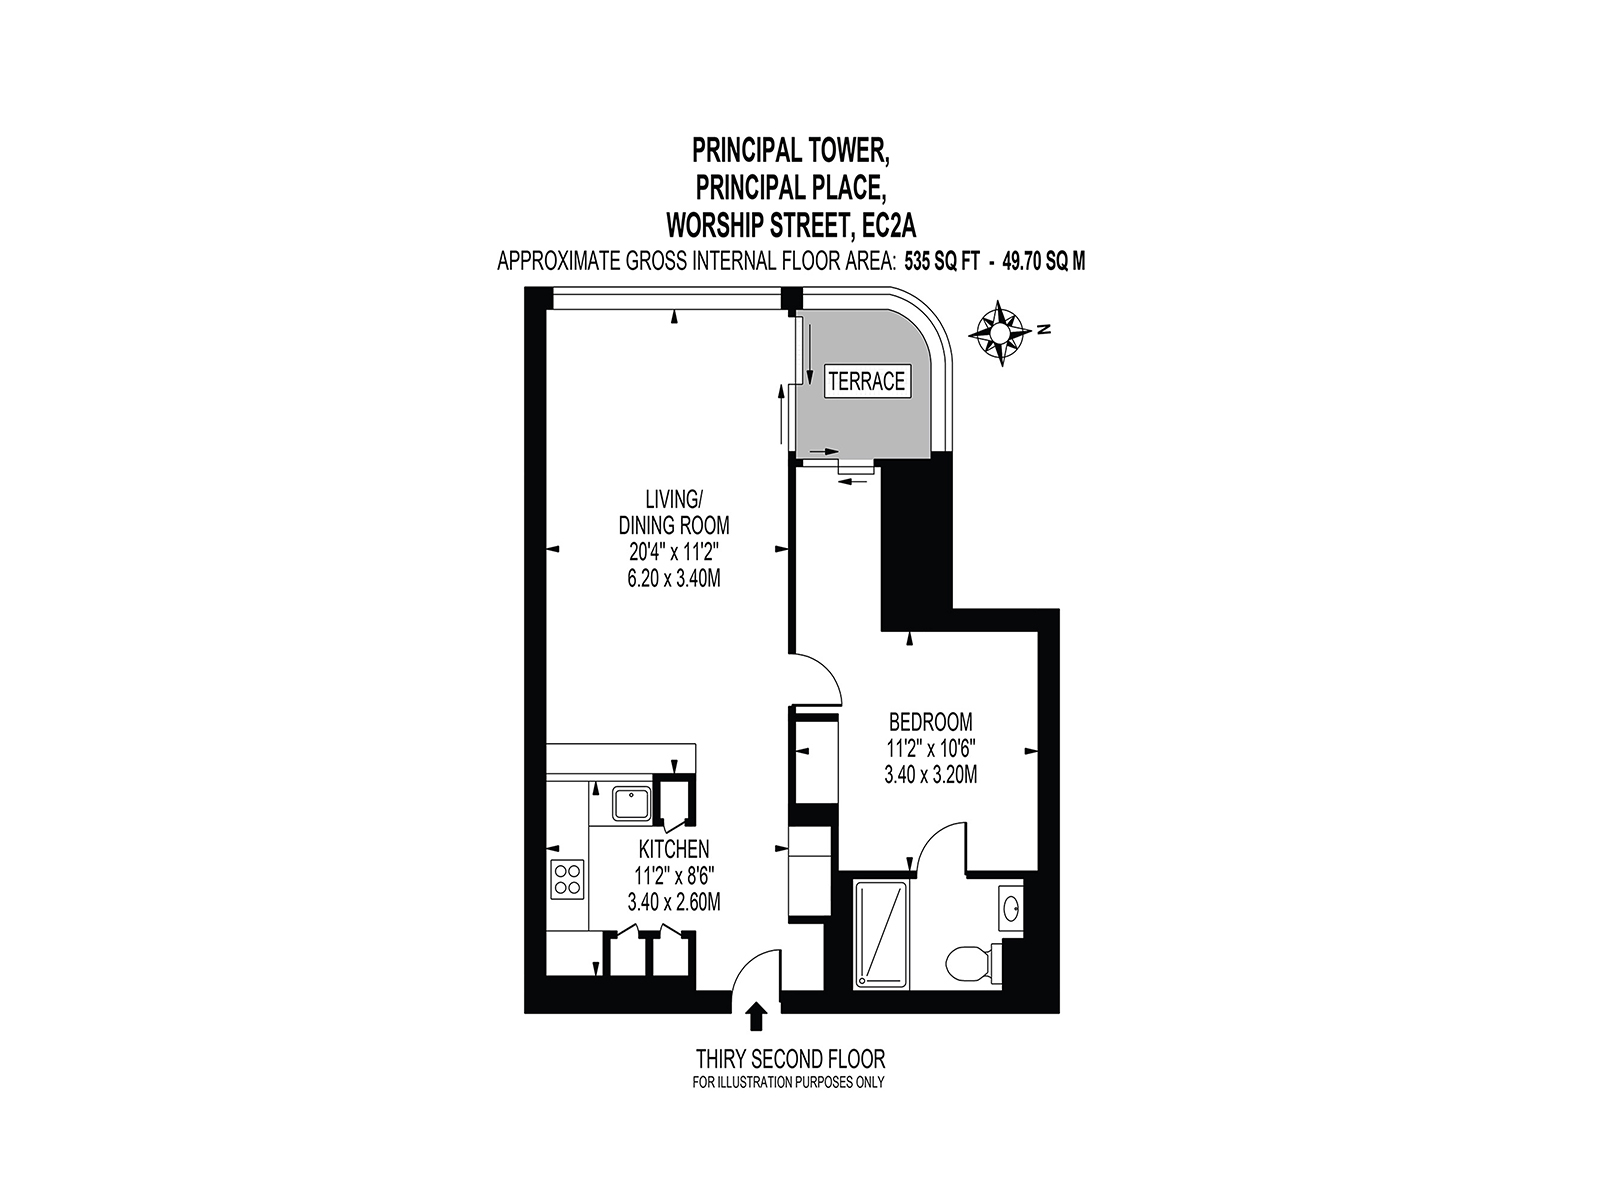 Principal Tower one bedroom apartment floor plan